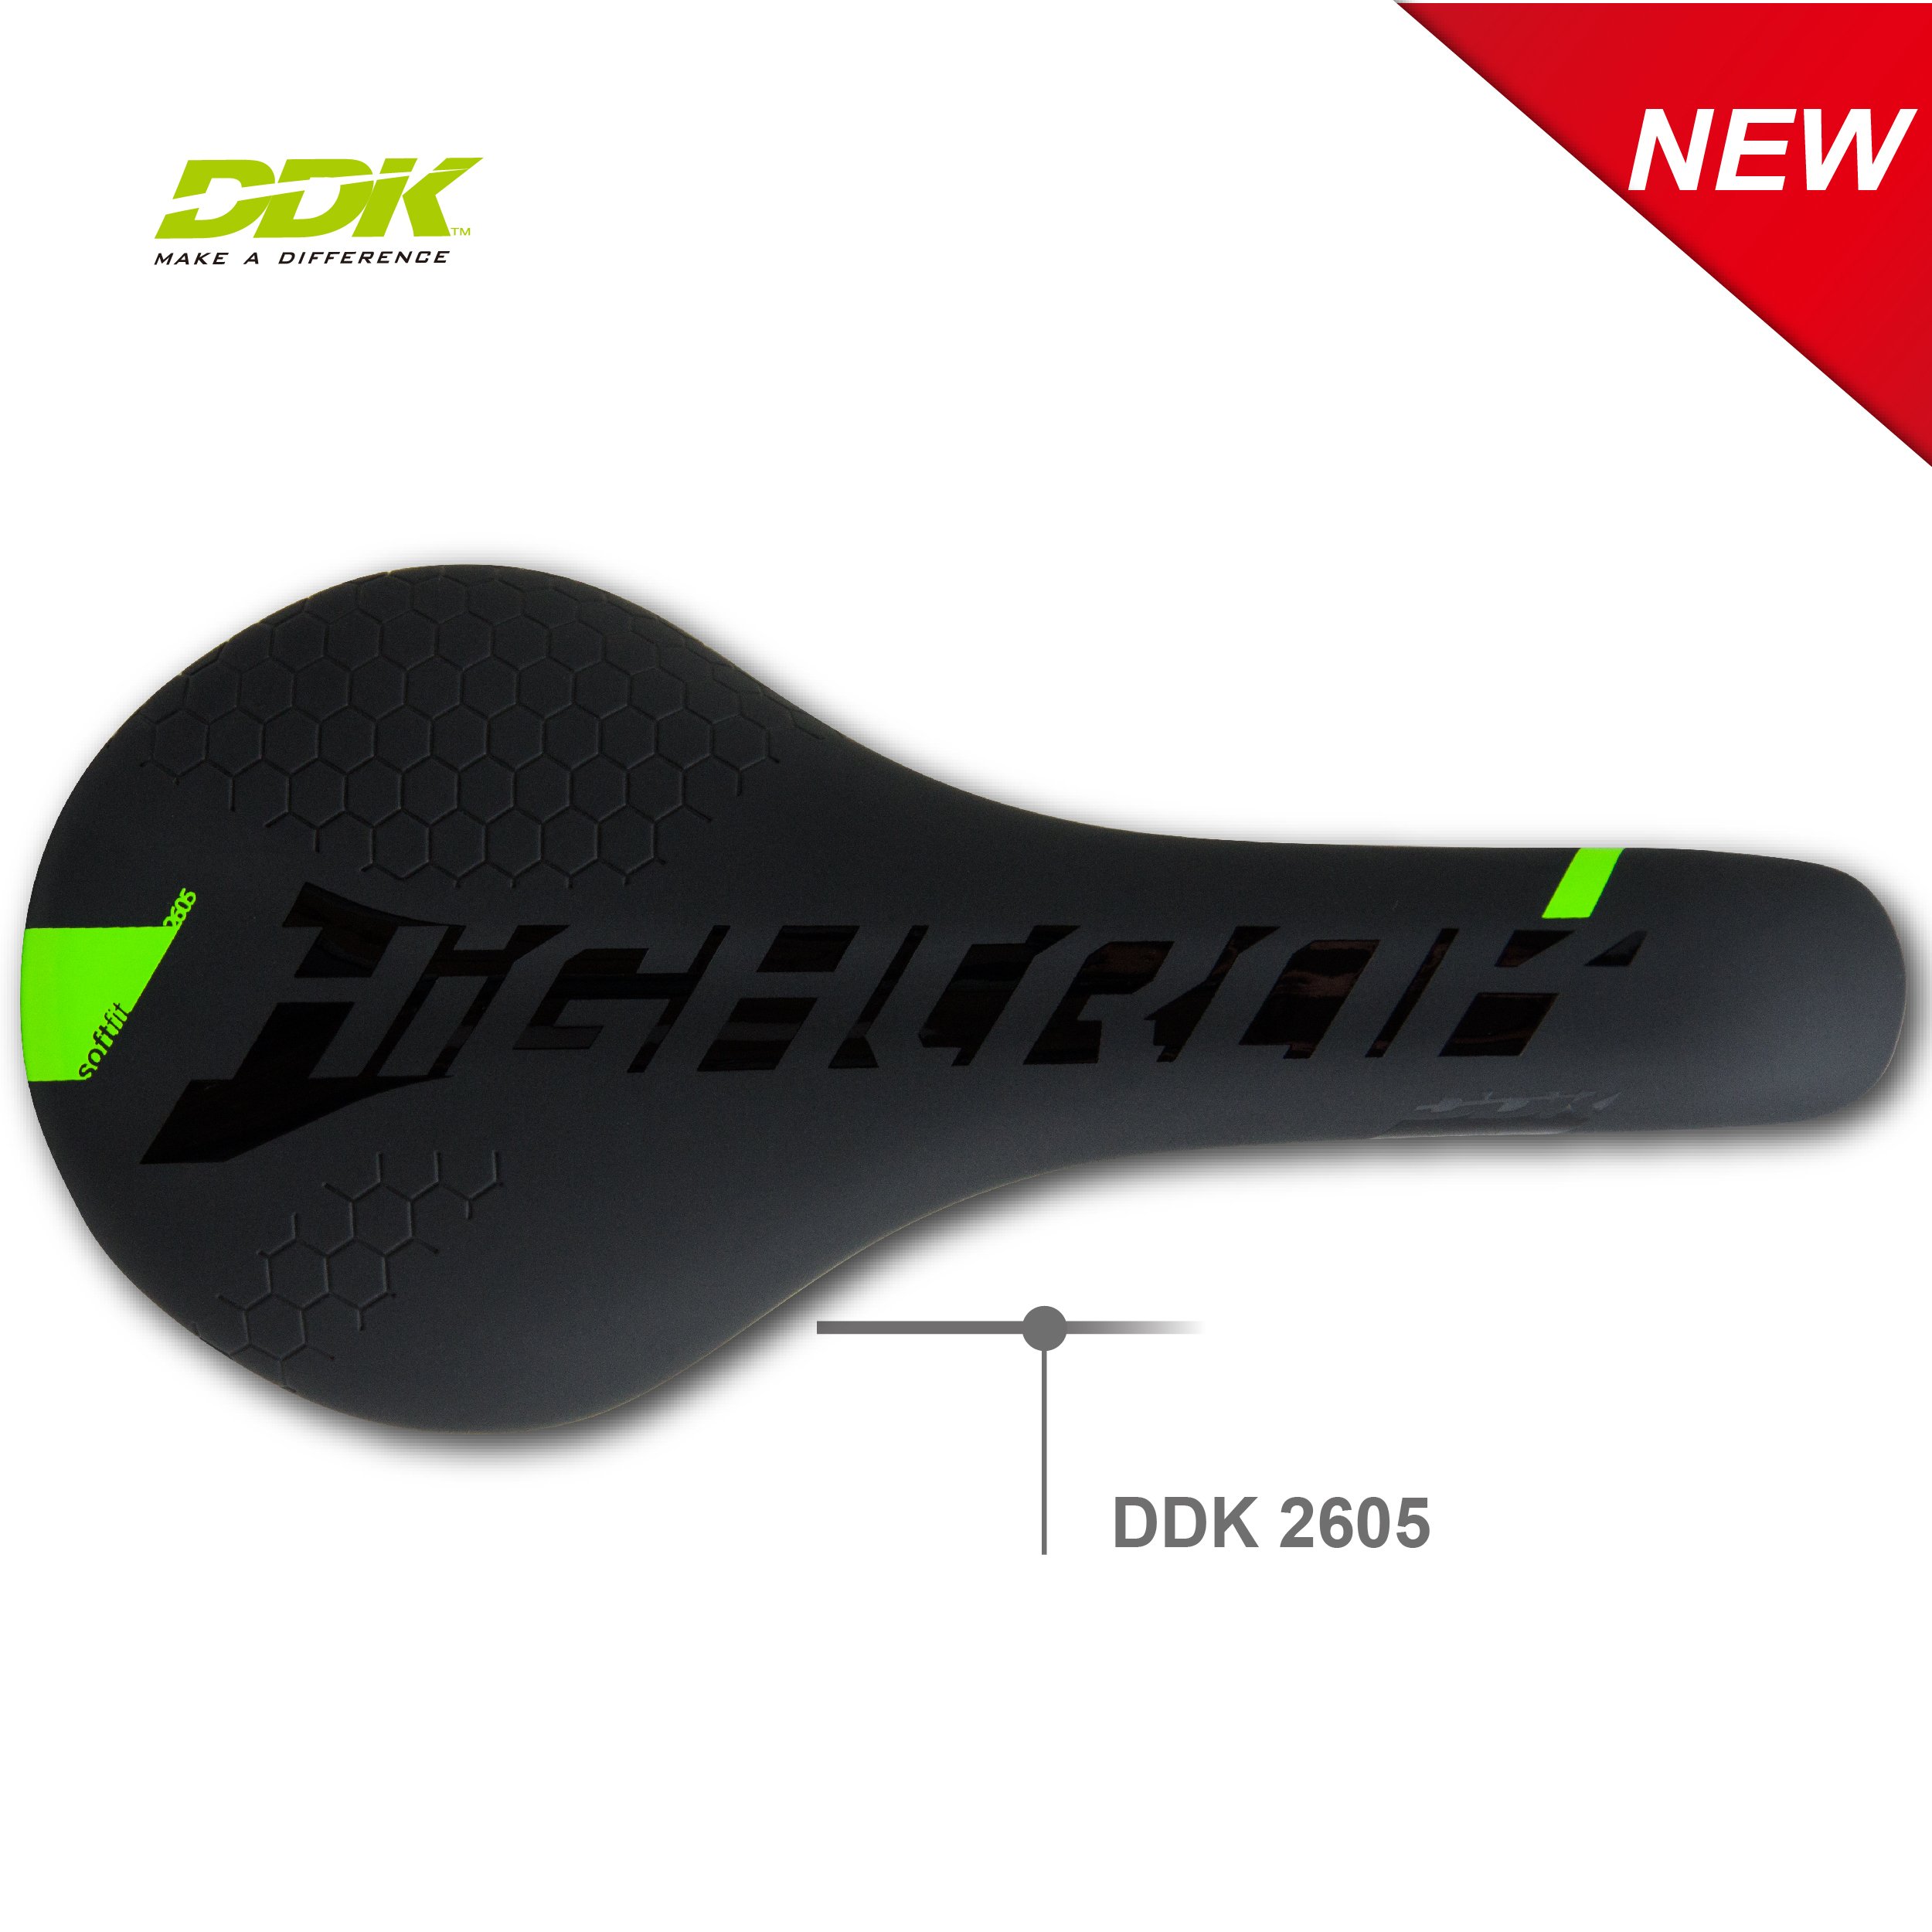 DDK-2605 HIGHTRAK